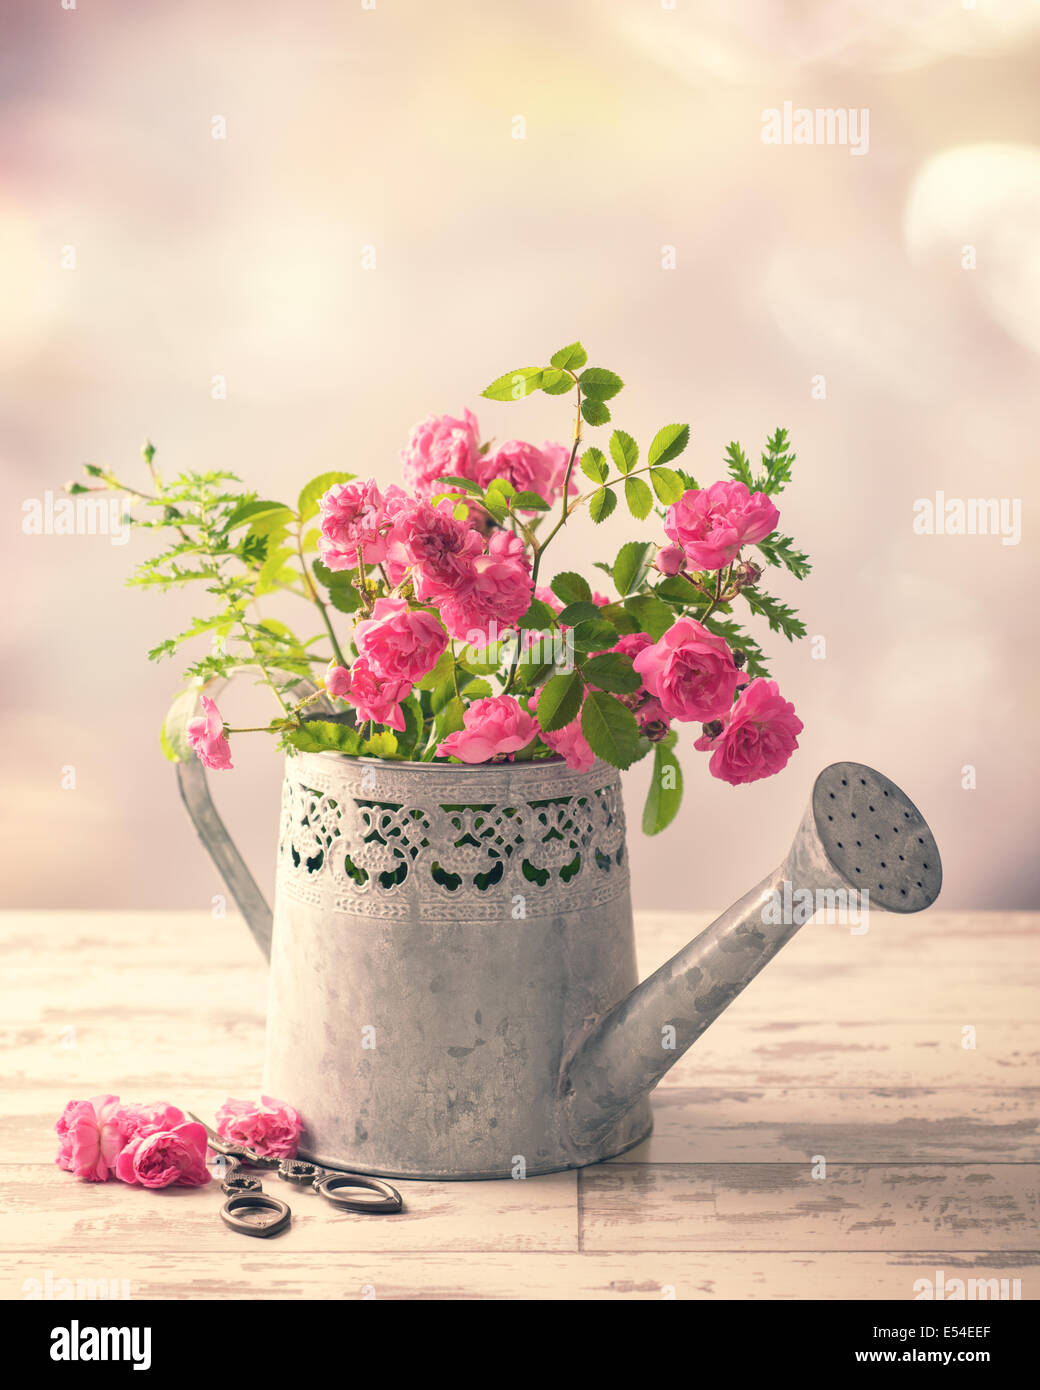 Regadera para flores fotografías e imágenes de alta resolución - Alamy